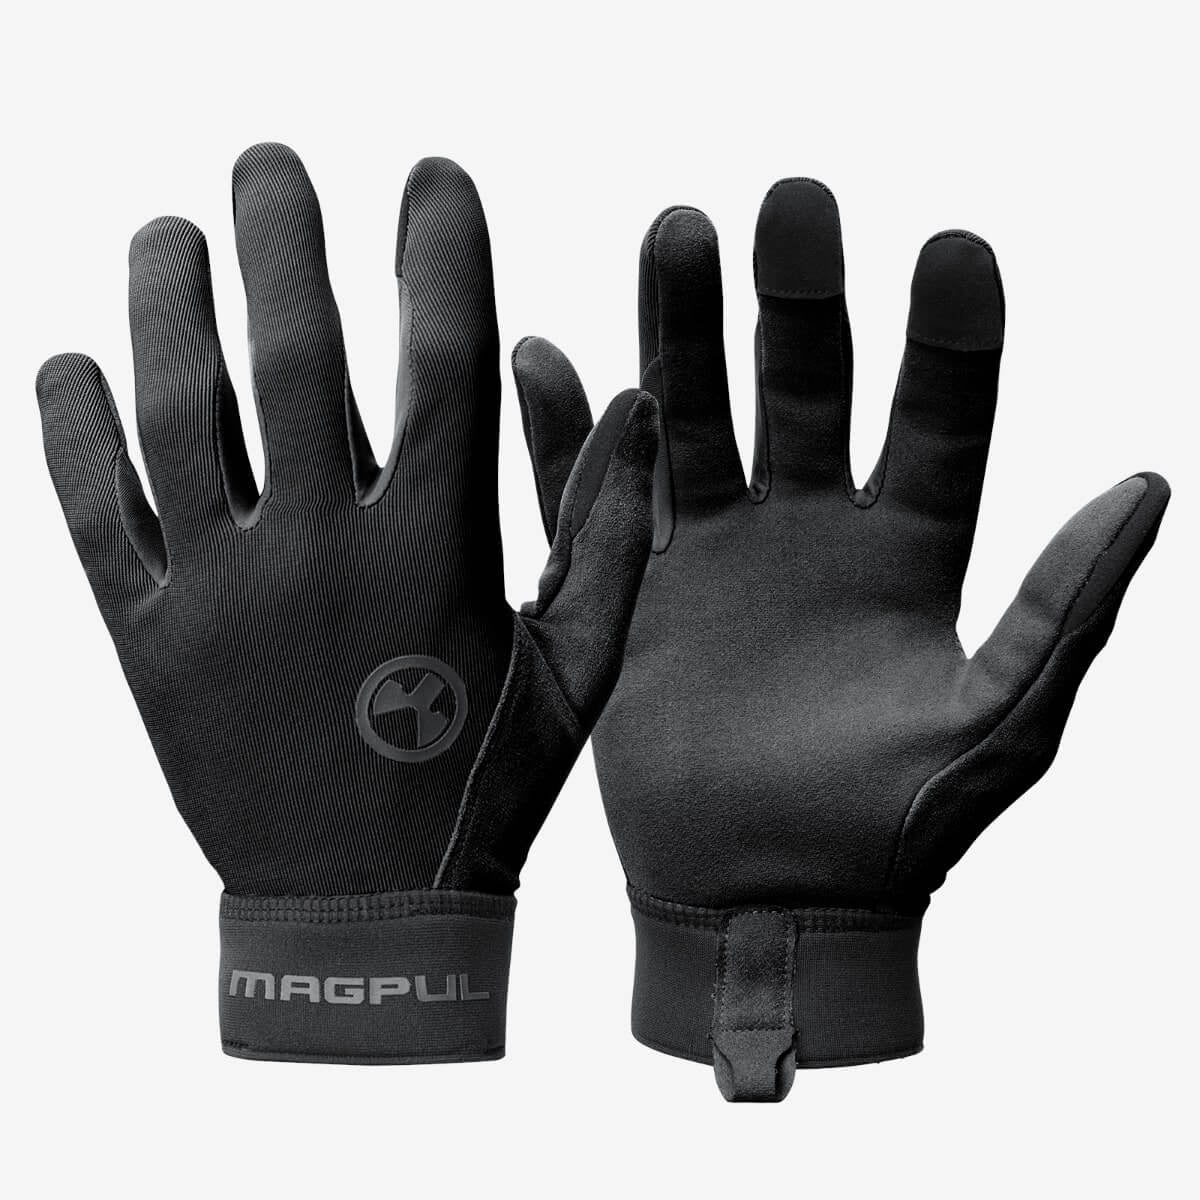 Magpul Technical Glove 2.0 Black X Large